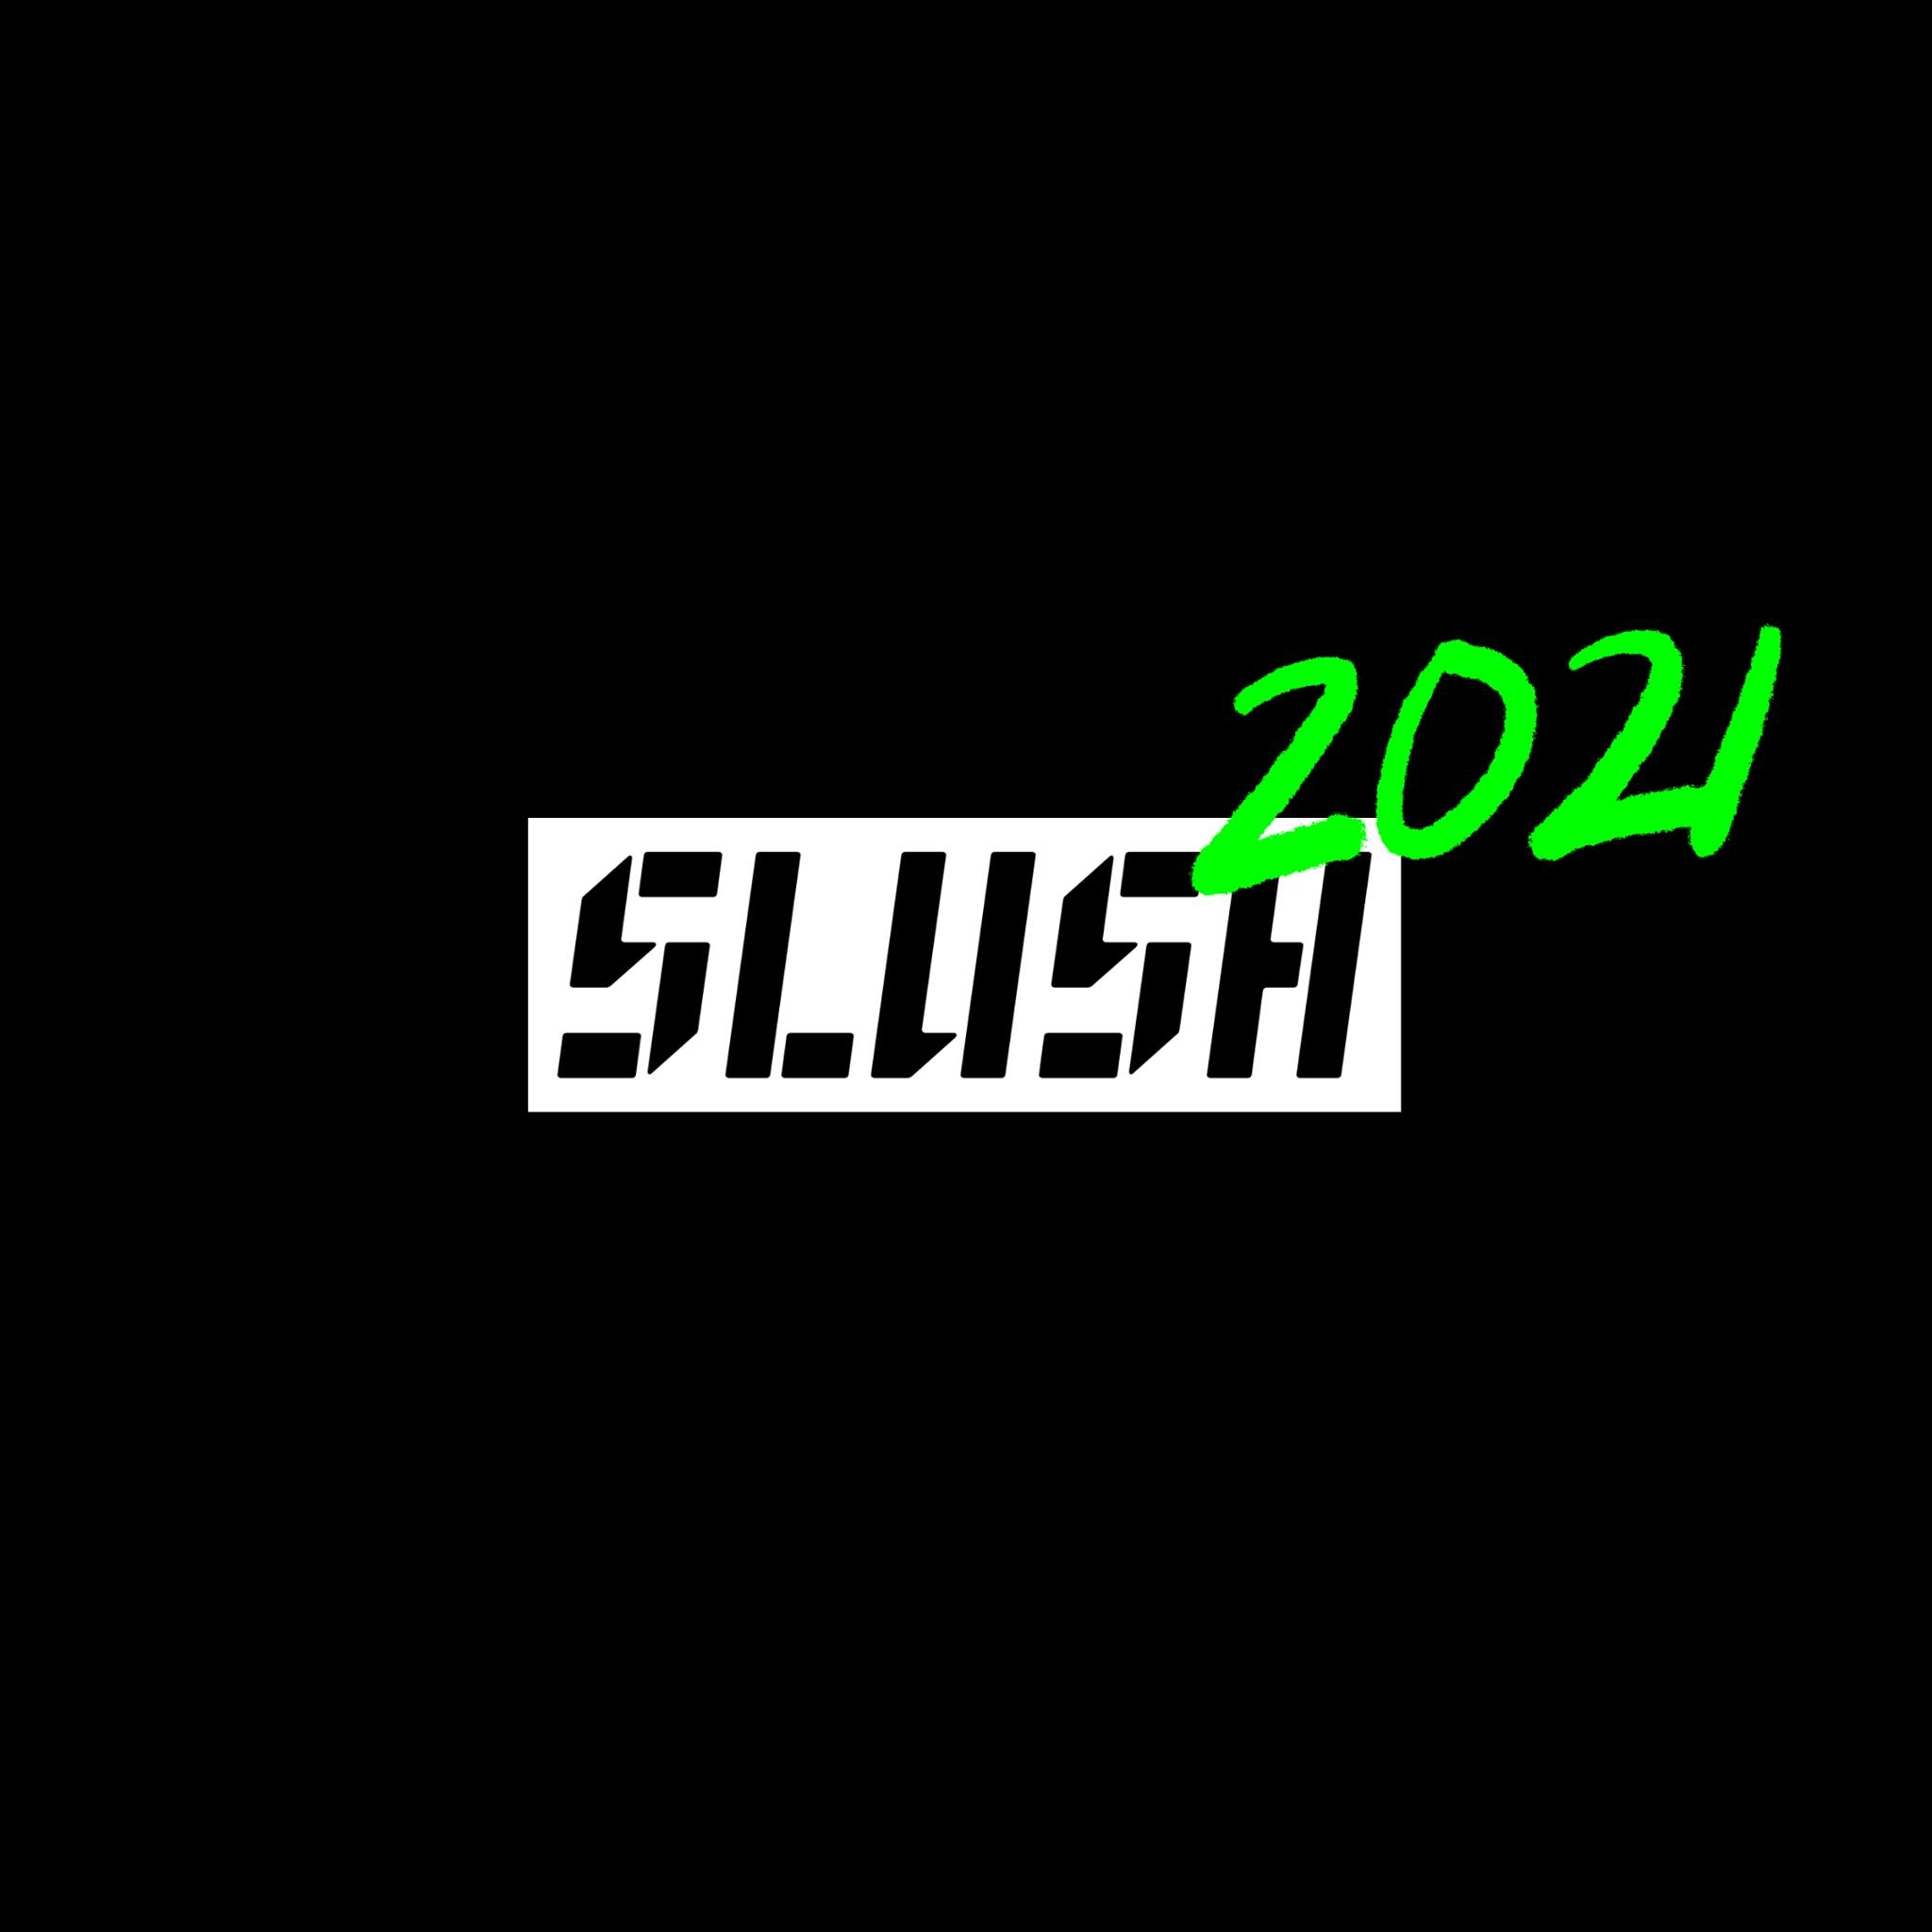 Slush 2021